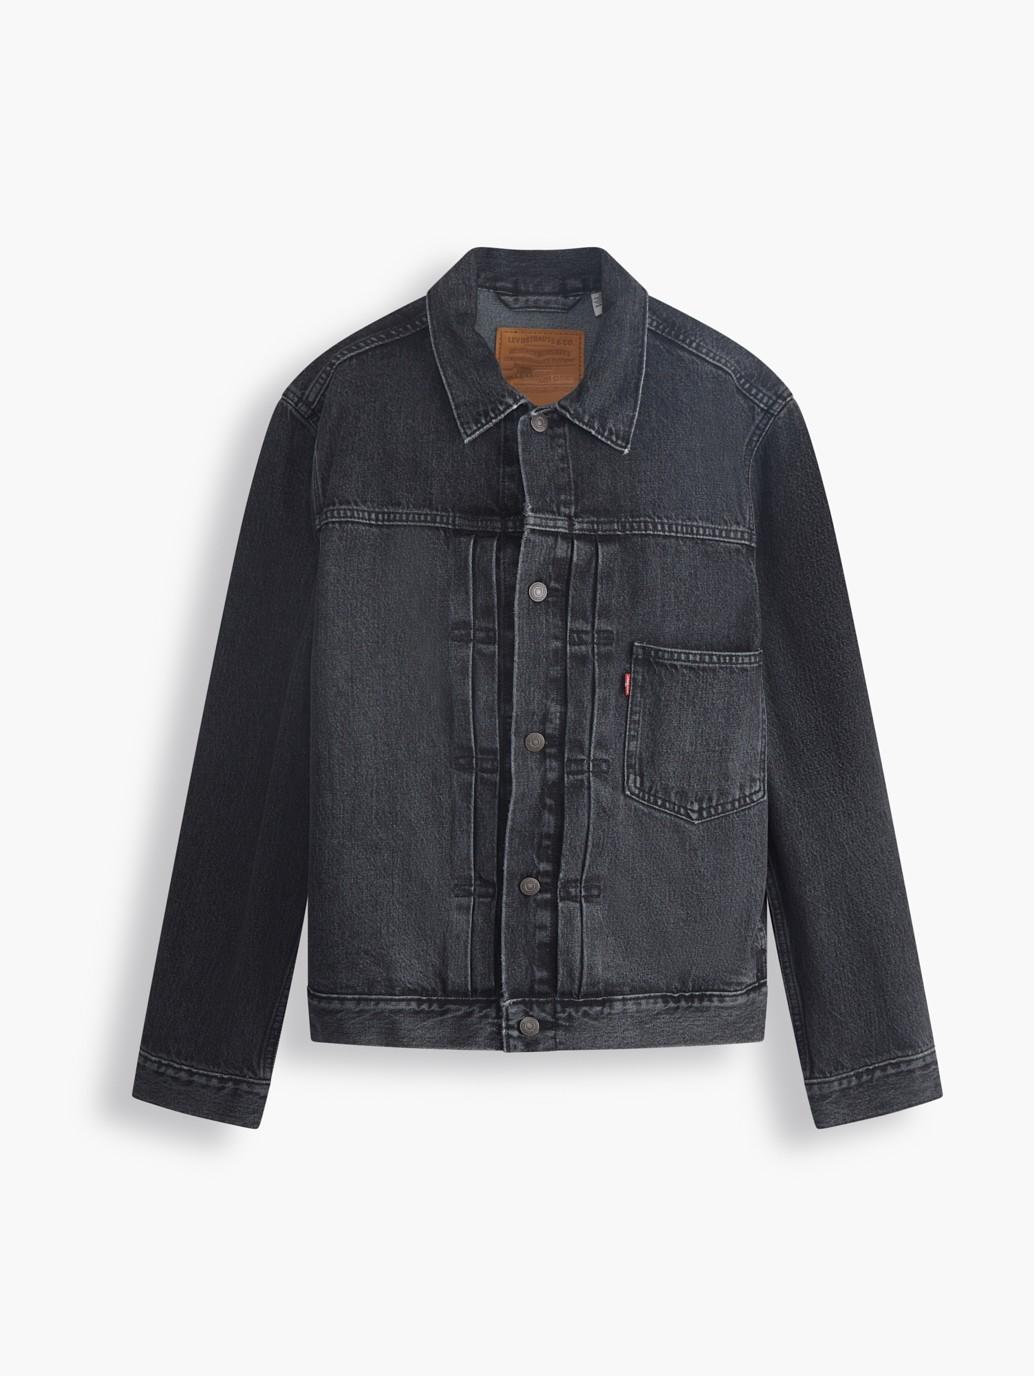 Buy Levi's® Men's Type I Trucker Jacket | Levi’s® Official Online Store SG